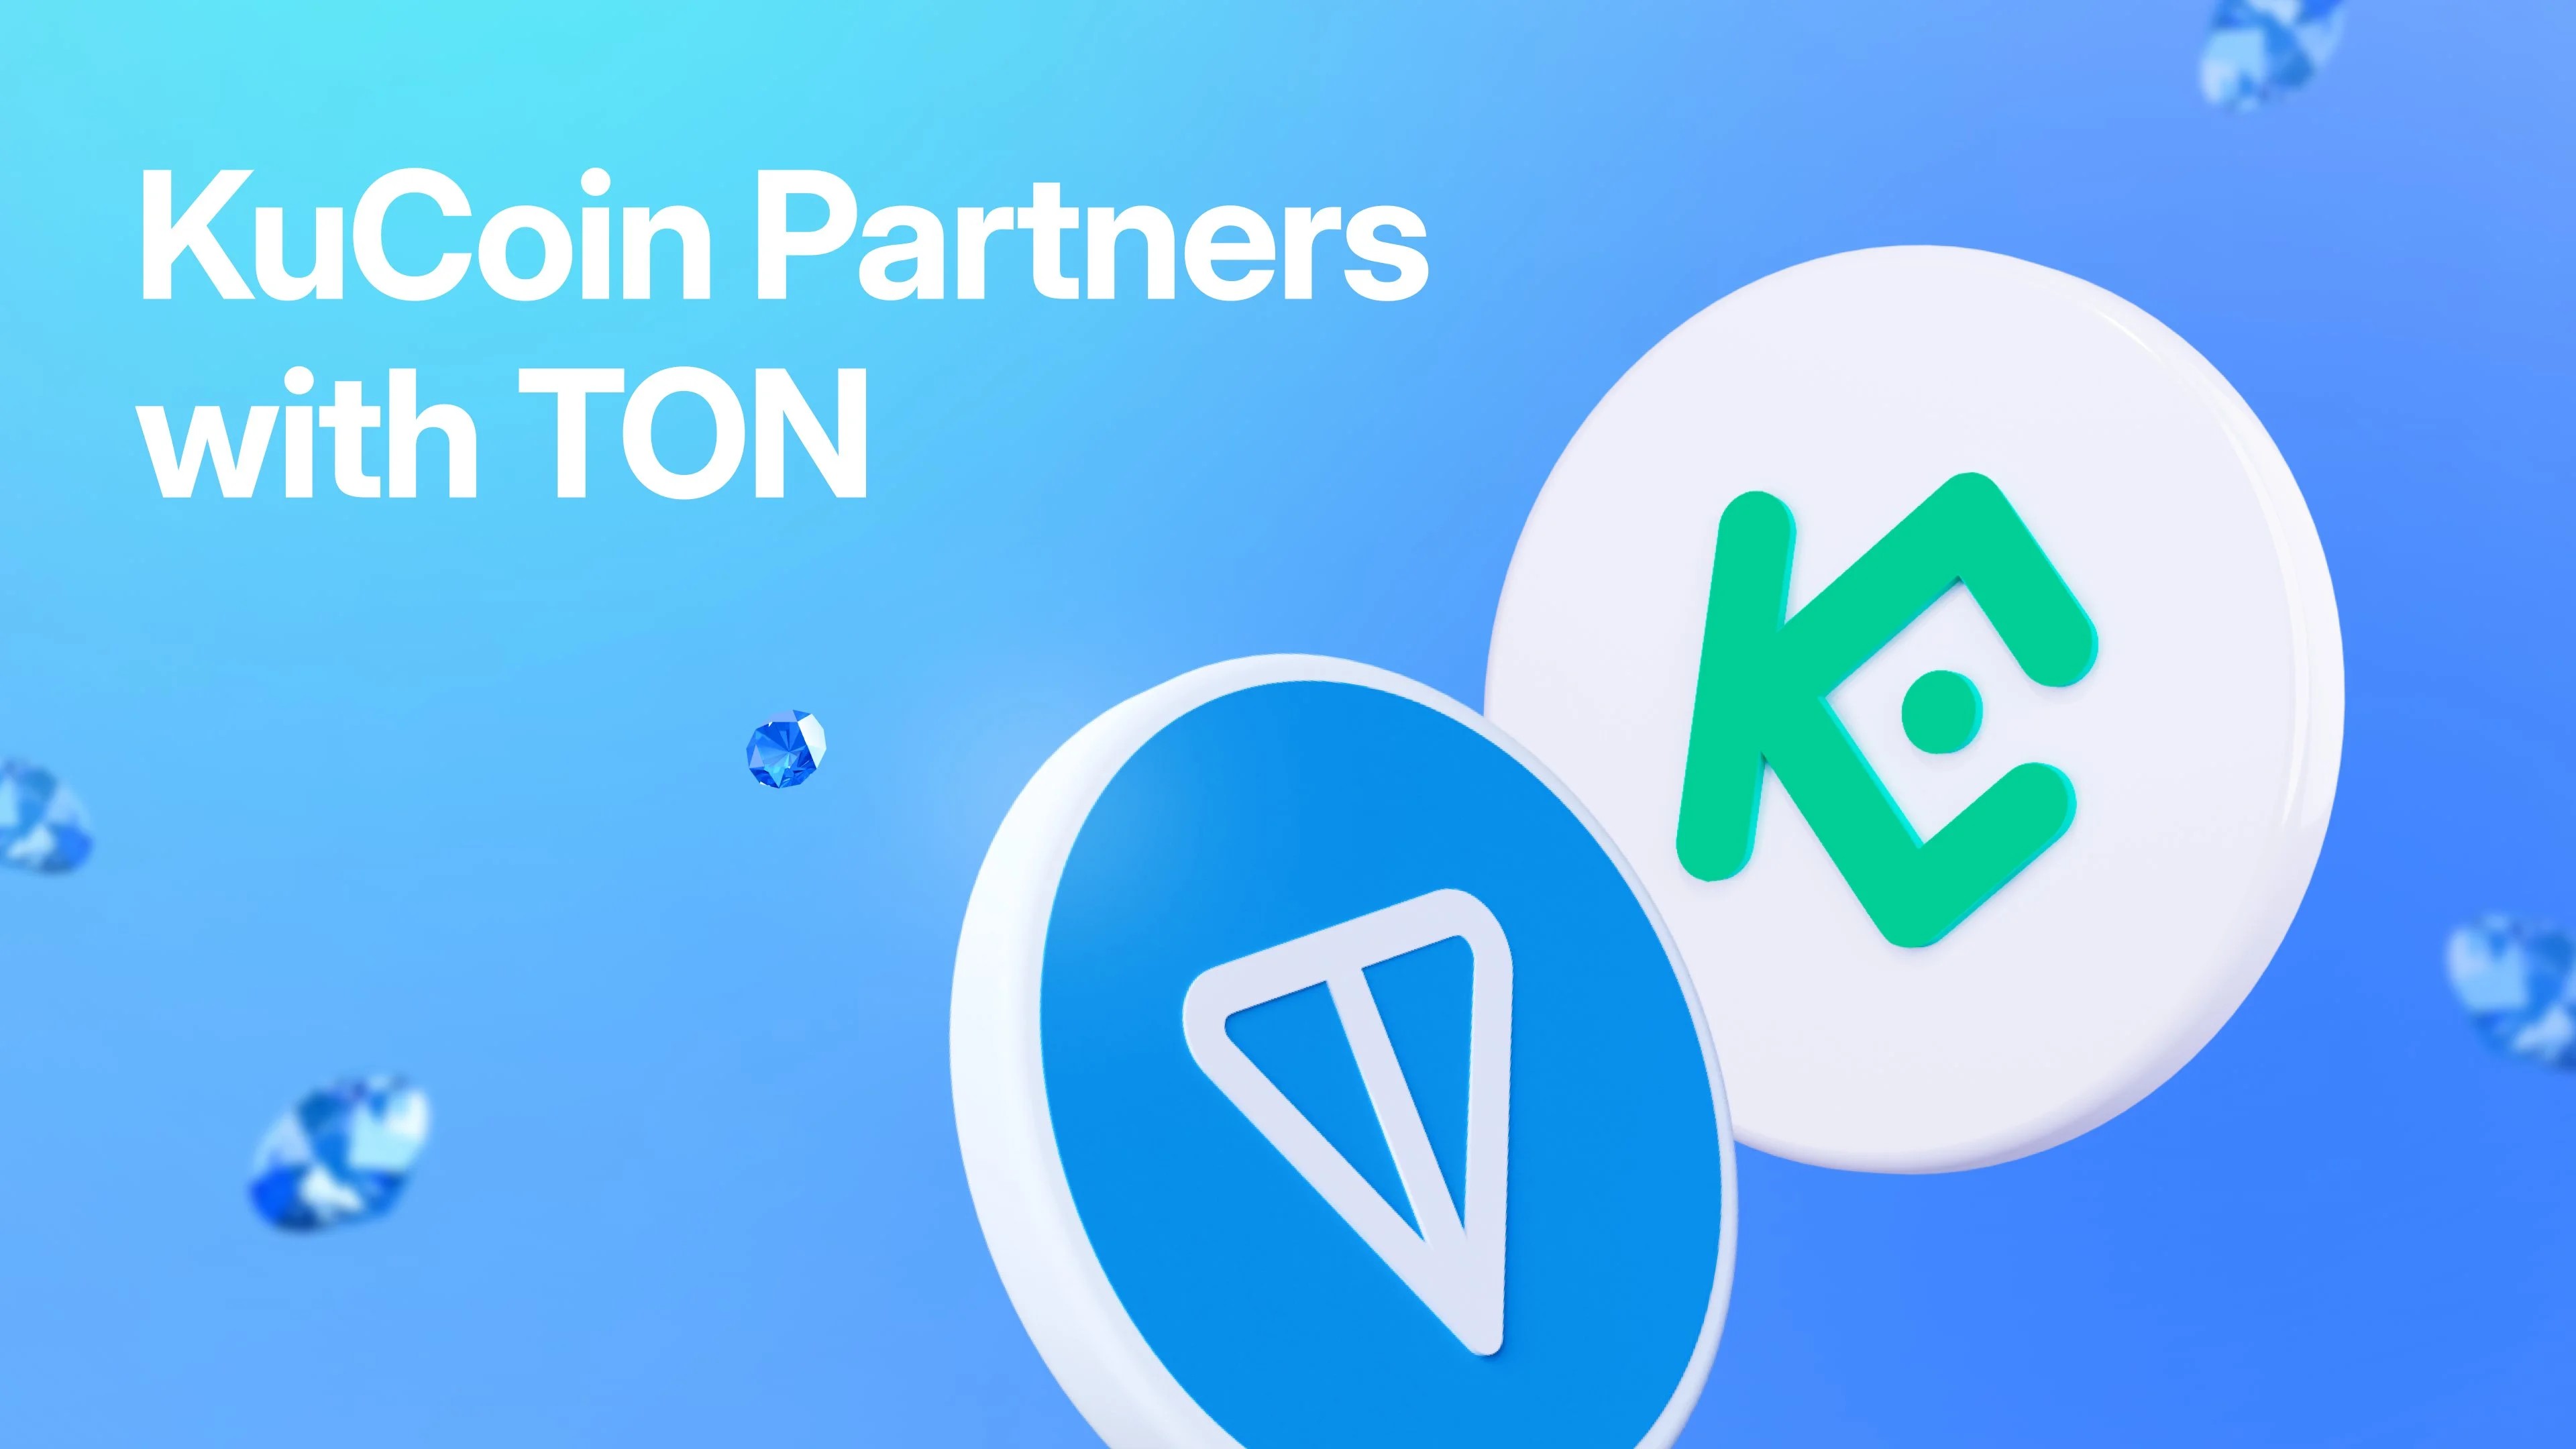 Kucoin partners with Ton